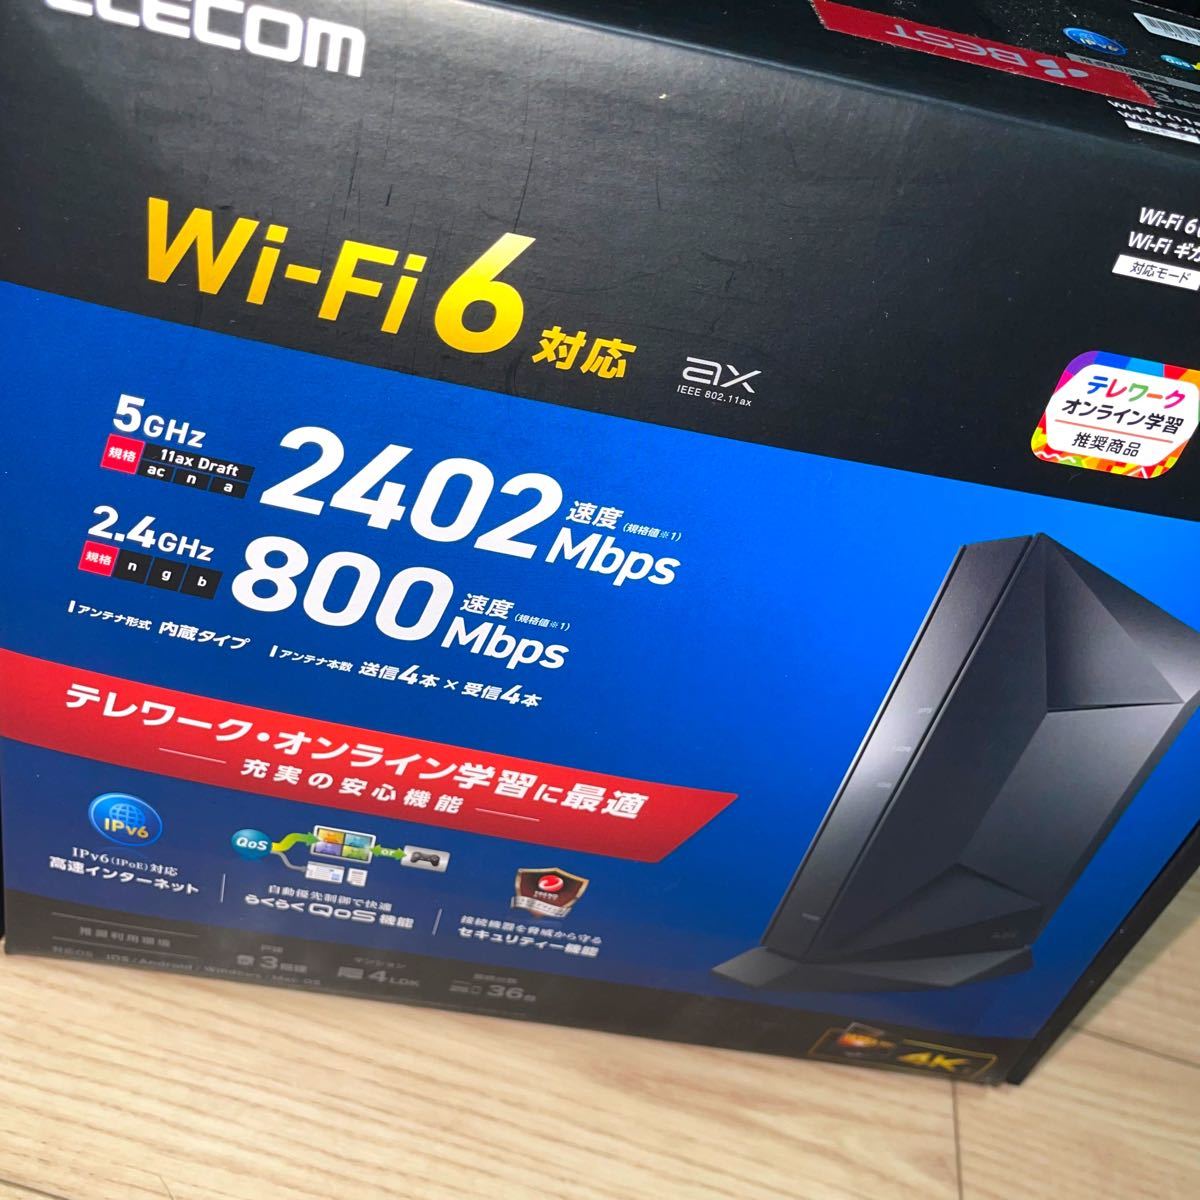 Wi-Fi 6(11ax) 2402+800Mbps Wi-Fi ギガビットルーター